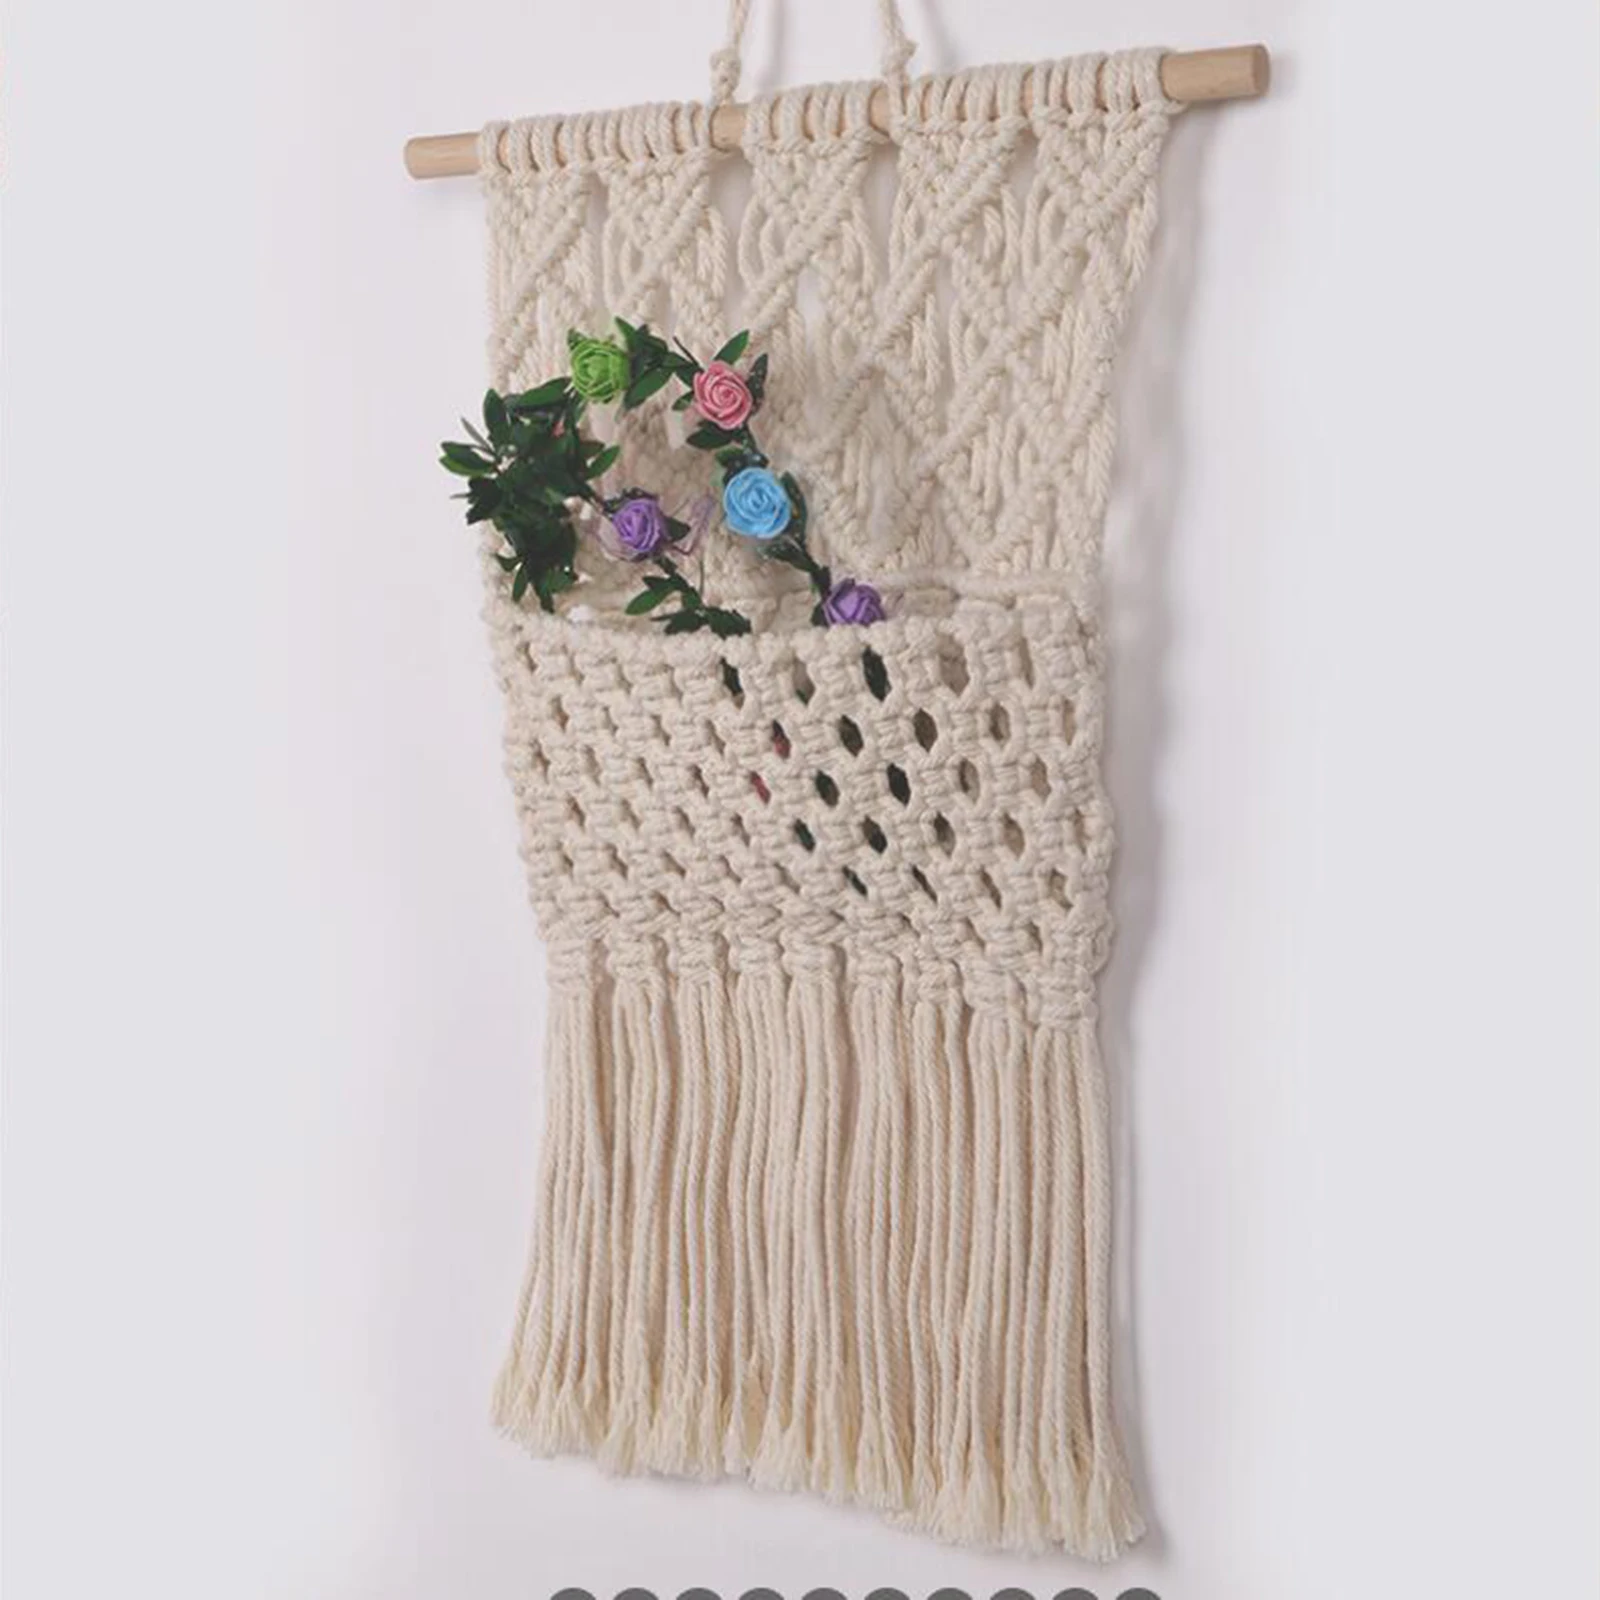 Handmade Macrame Tapestry Key Mail Woven Art Wall Hanging Pocket Holder for Decoration